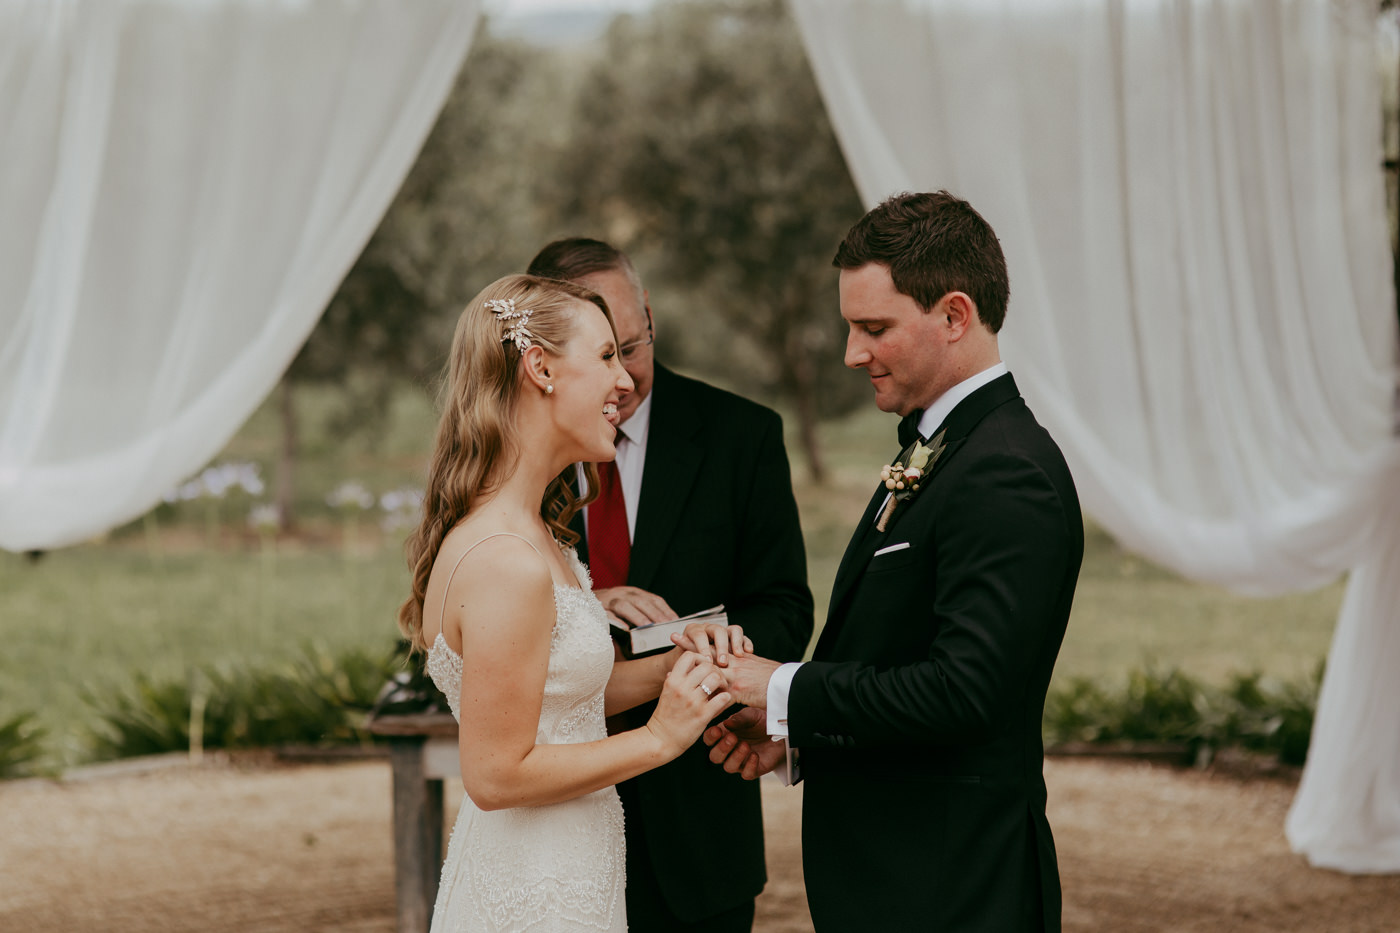 Anthony & Eliet - Wagga Wagga Wedding - Country NSW - Samantha Heather Photography-106.jpg